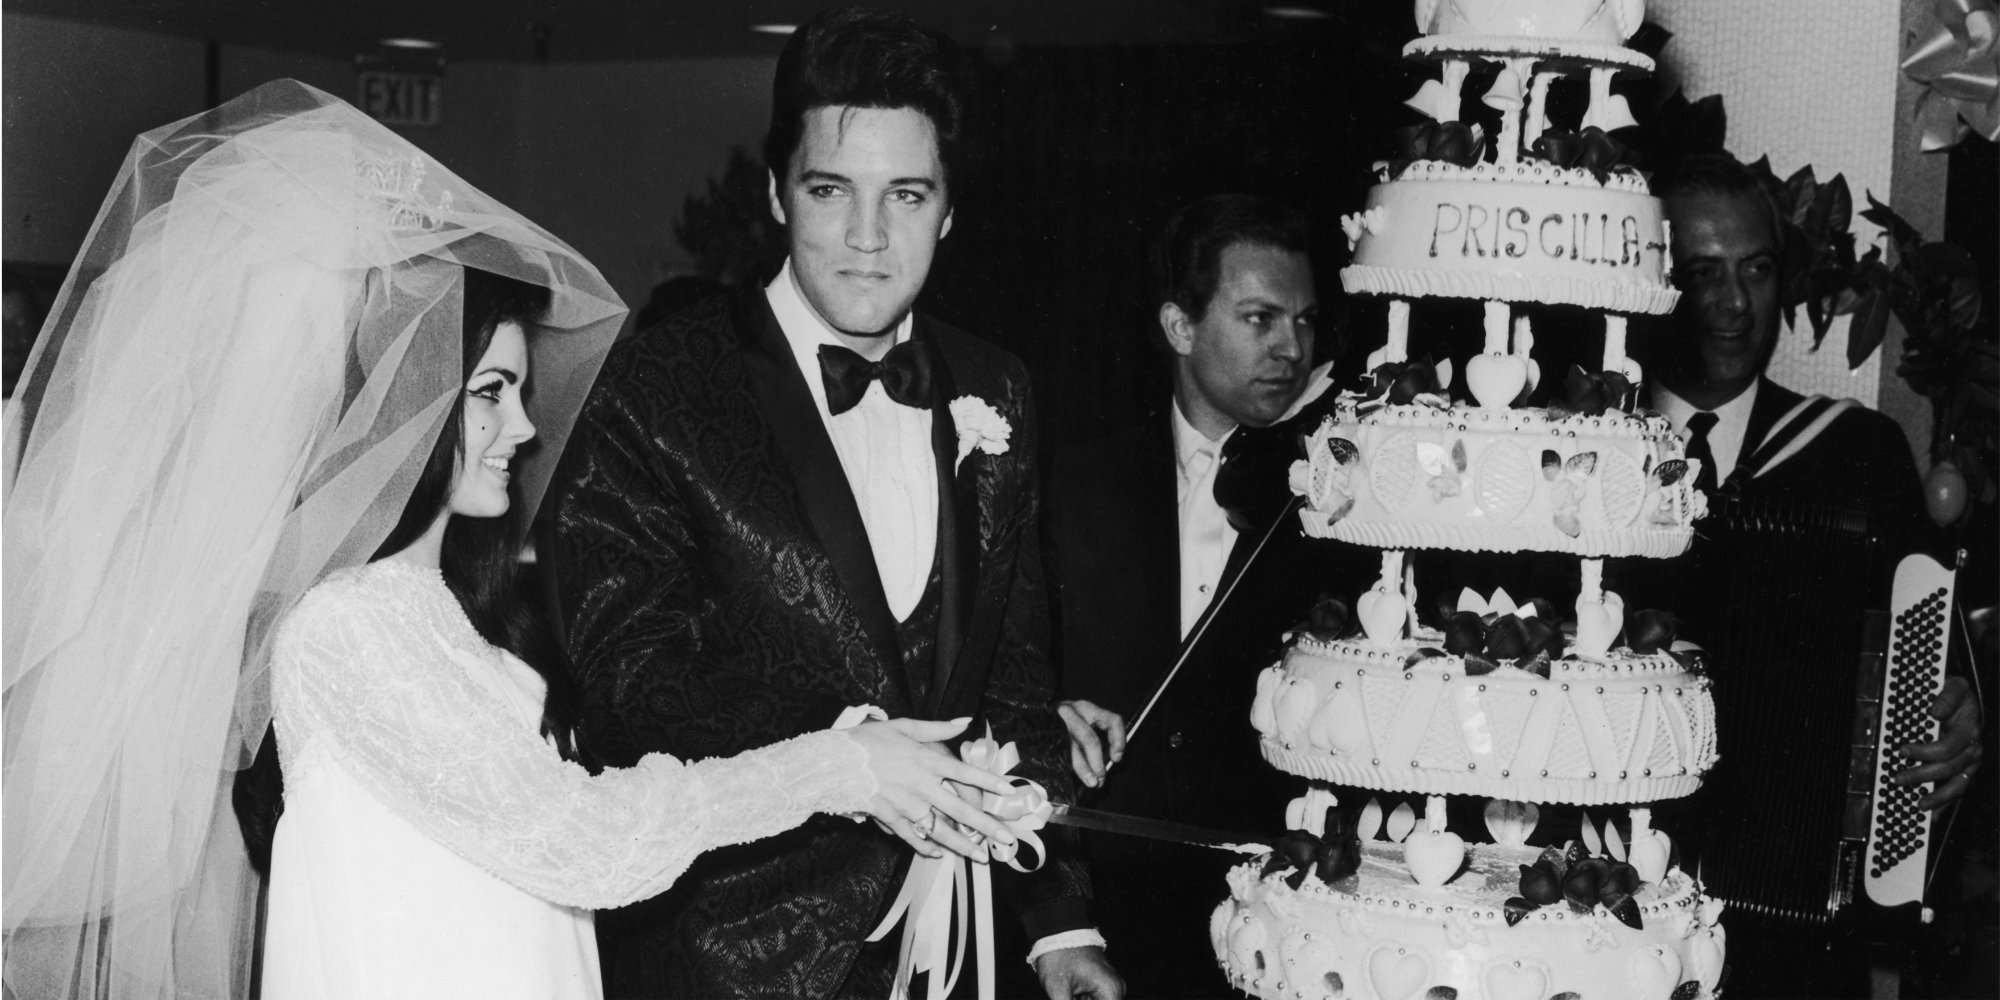 Priscilla Presley and Elvis Presley on their wedding day in 1967.